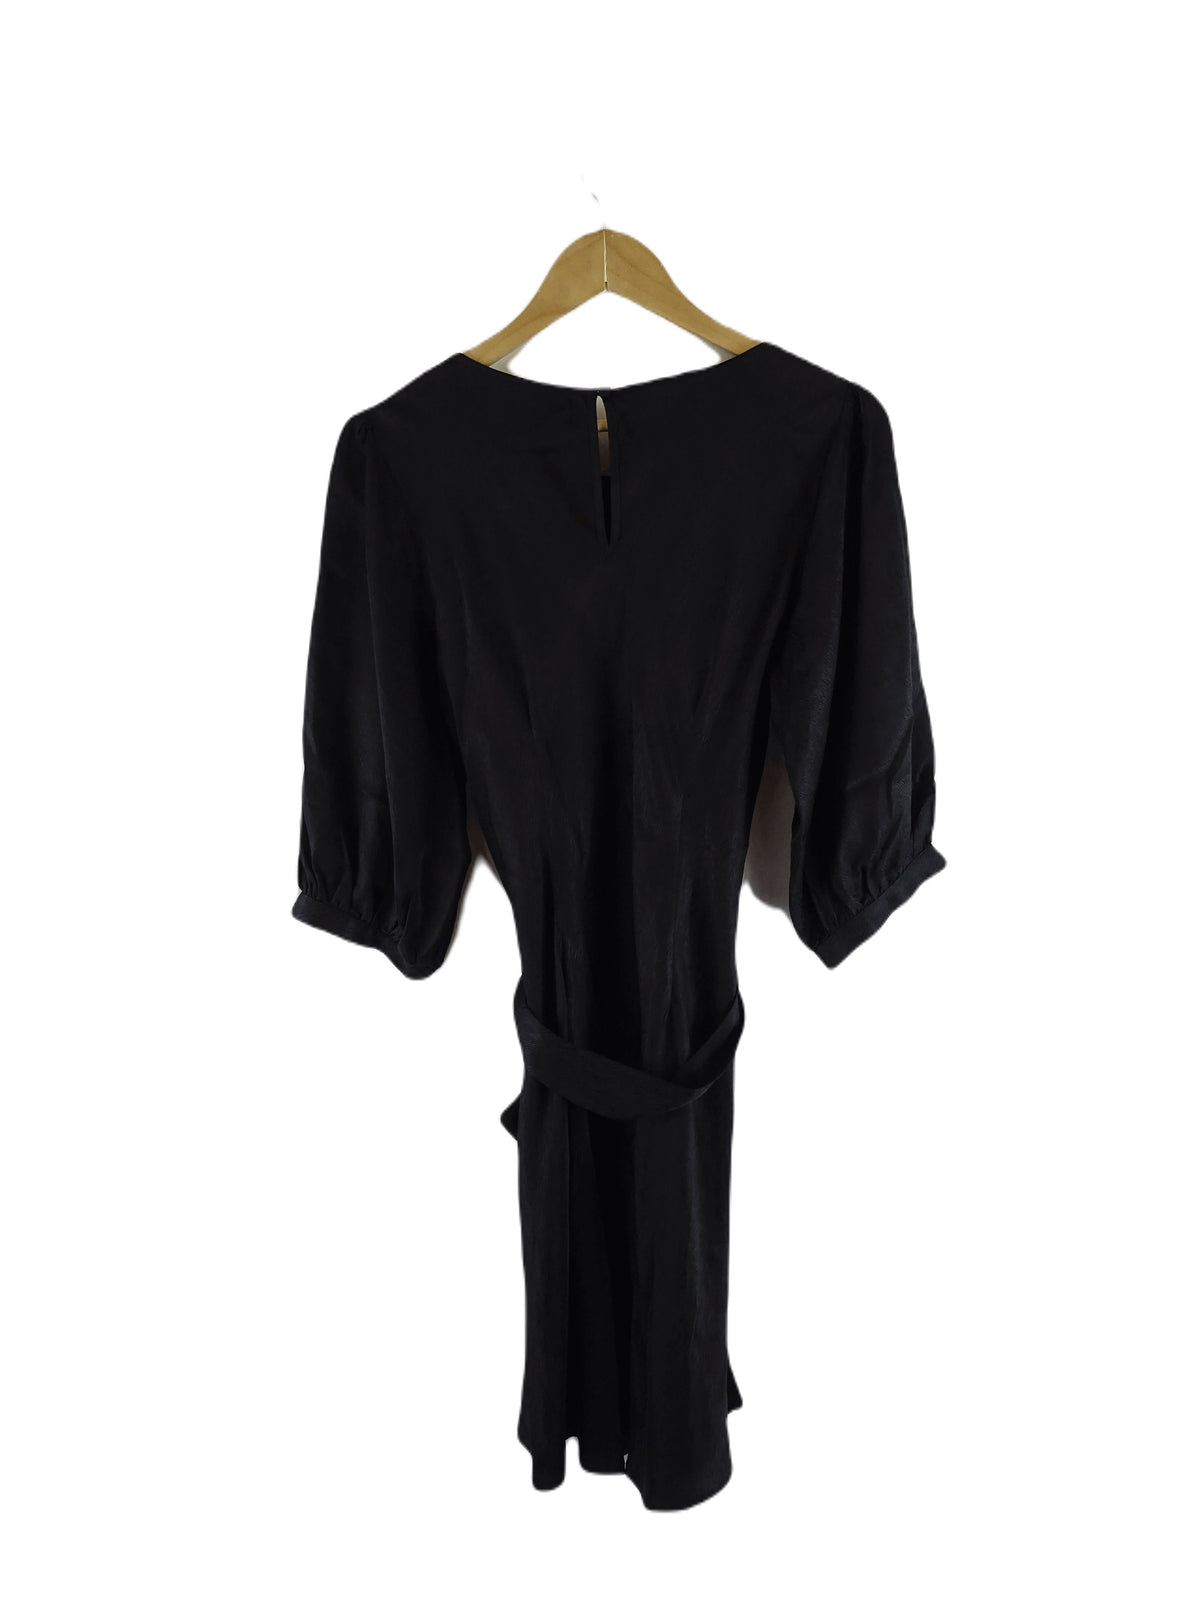 Auguste Black Dress 12